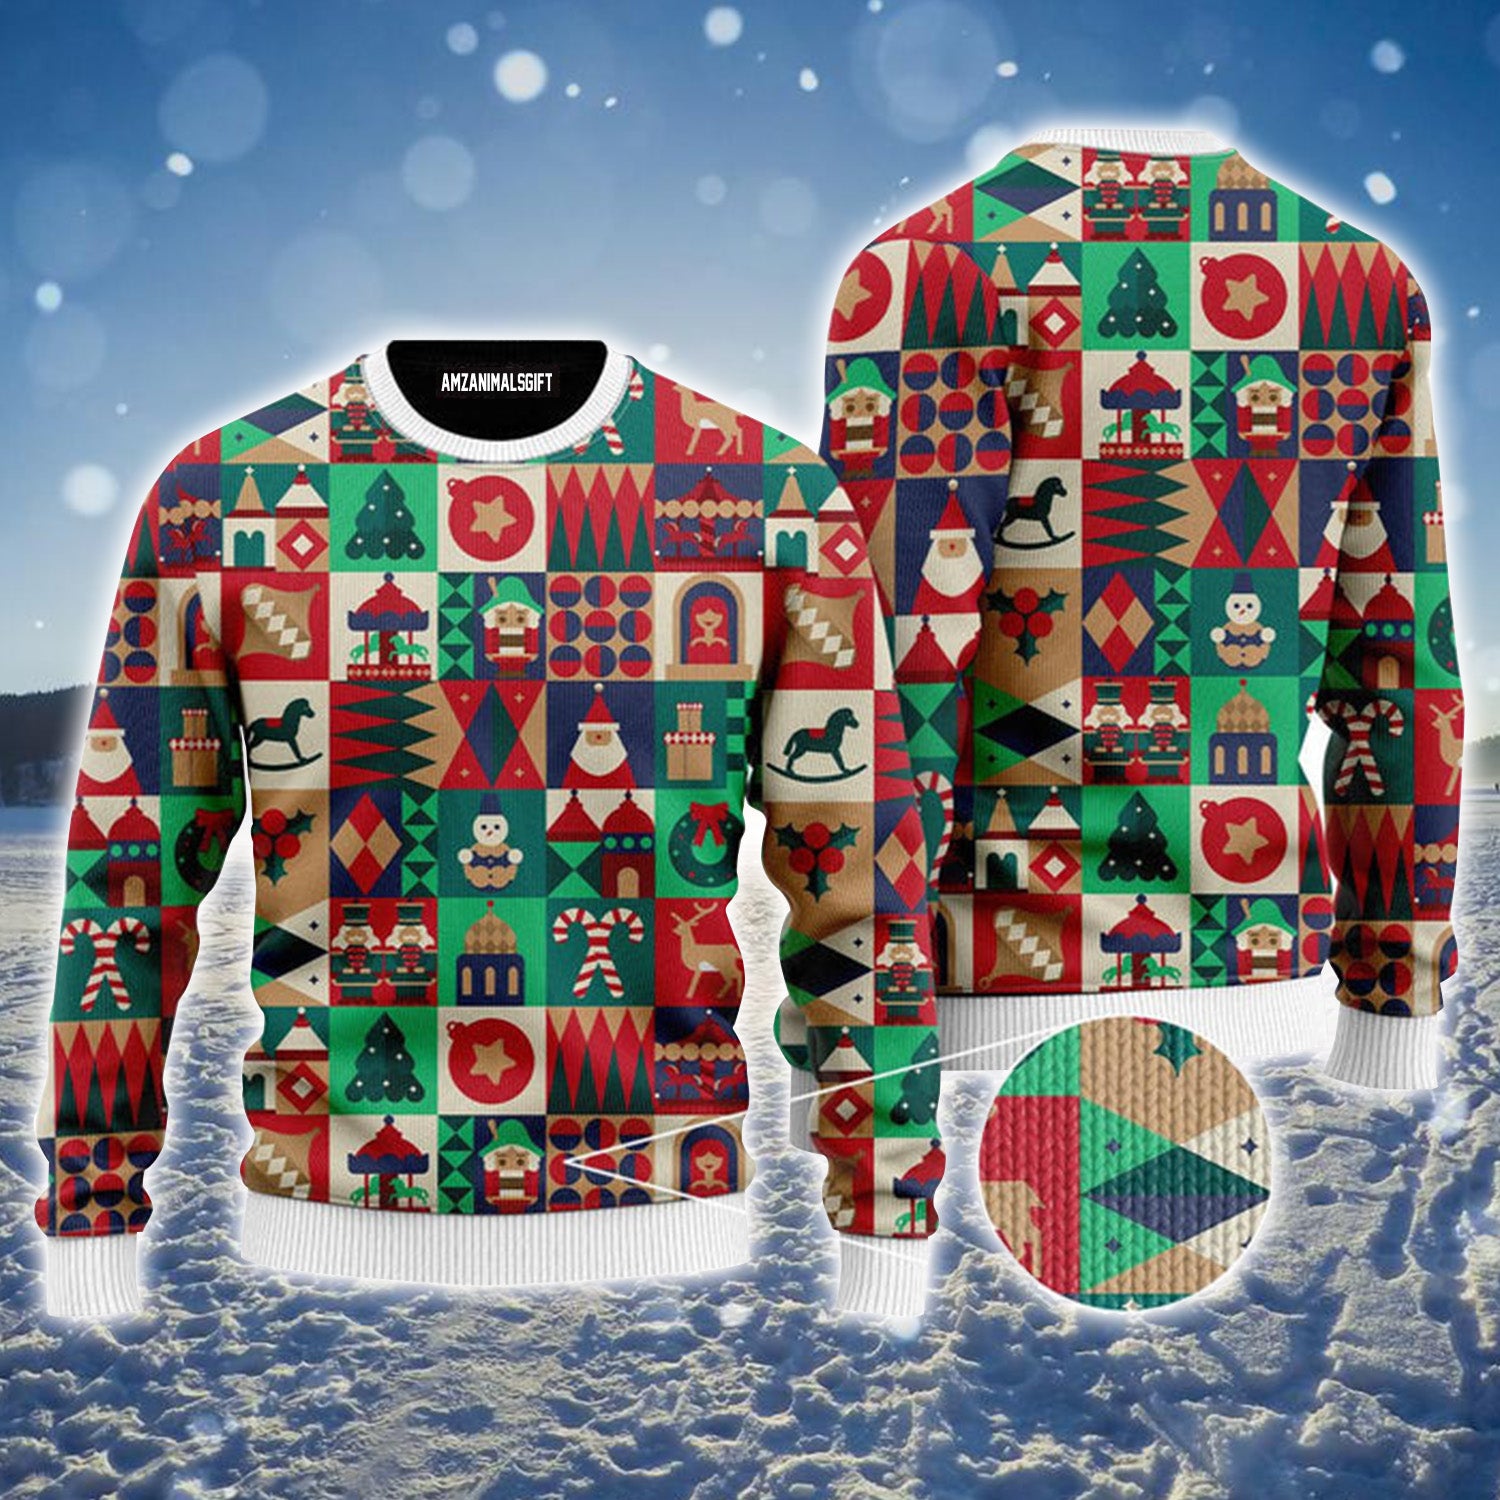 Fancy Xmas Holiday Urly Christmas Sweater, Christmas Sweater For Men & Women - Perfect Gift For Christmas, New Year, Winter Holiday